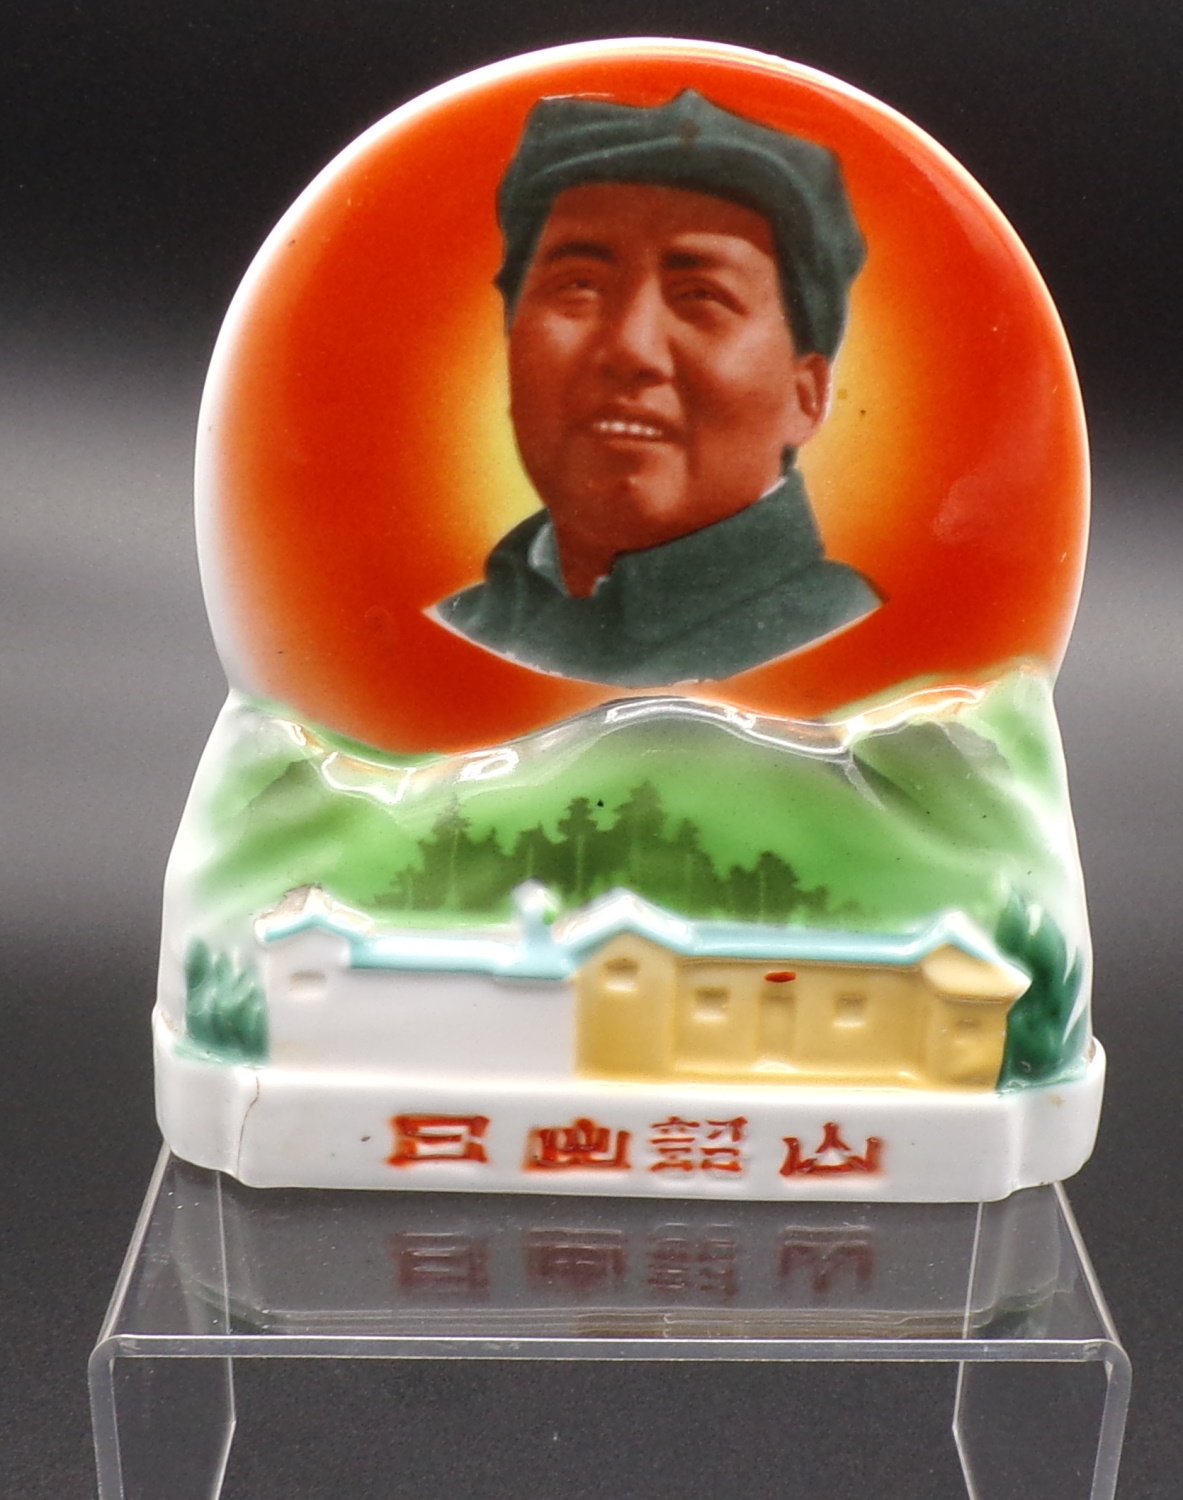 Ceramic Stand with Image of Mao 毛泽东的陶瓷纪念章